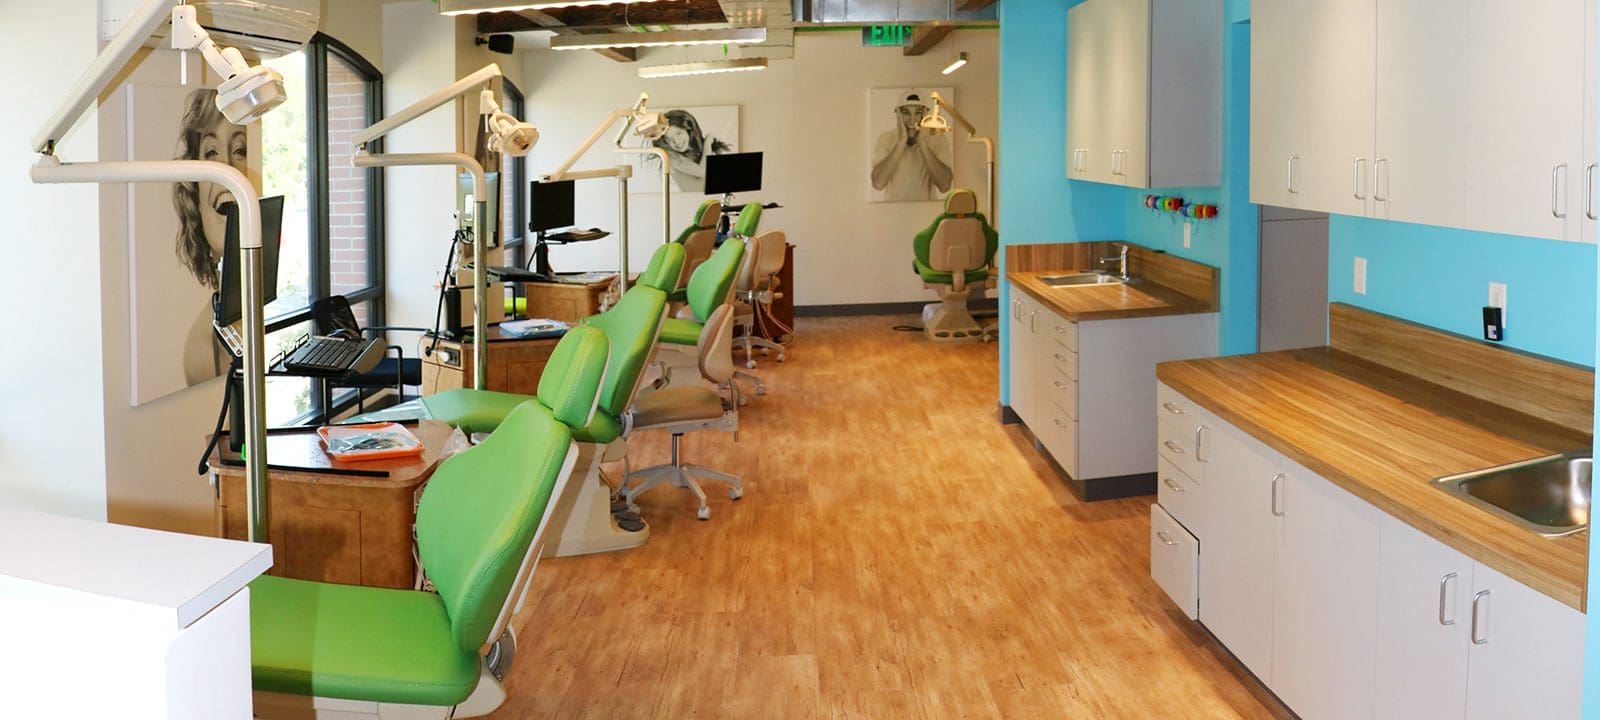 Precision Orthodontics - Interior office